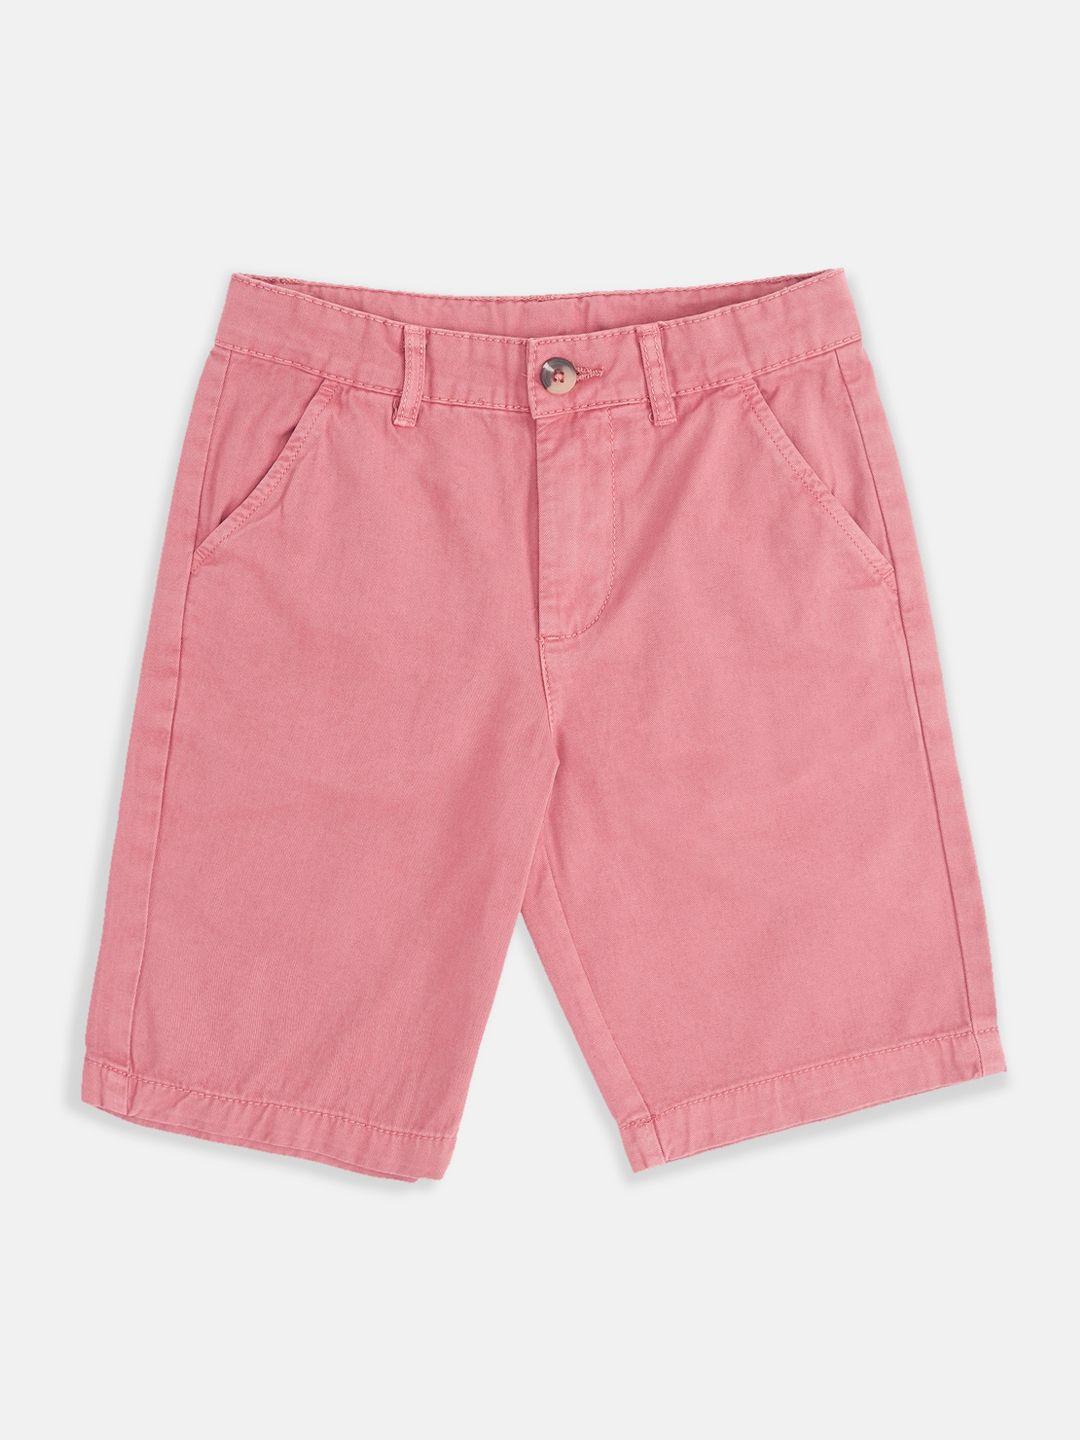 pantaloons junior boys cotton shorts